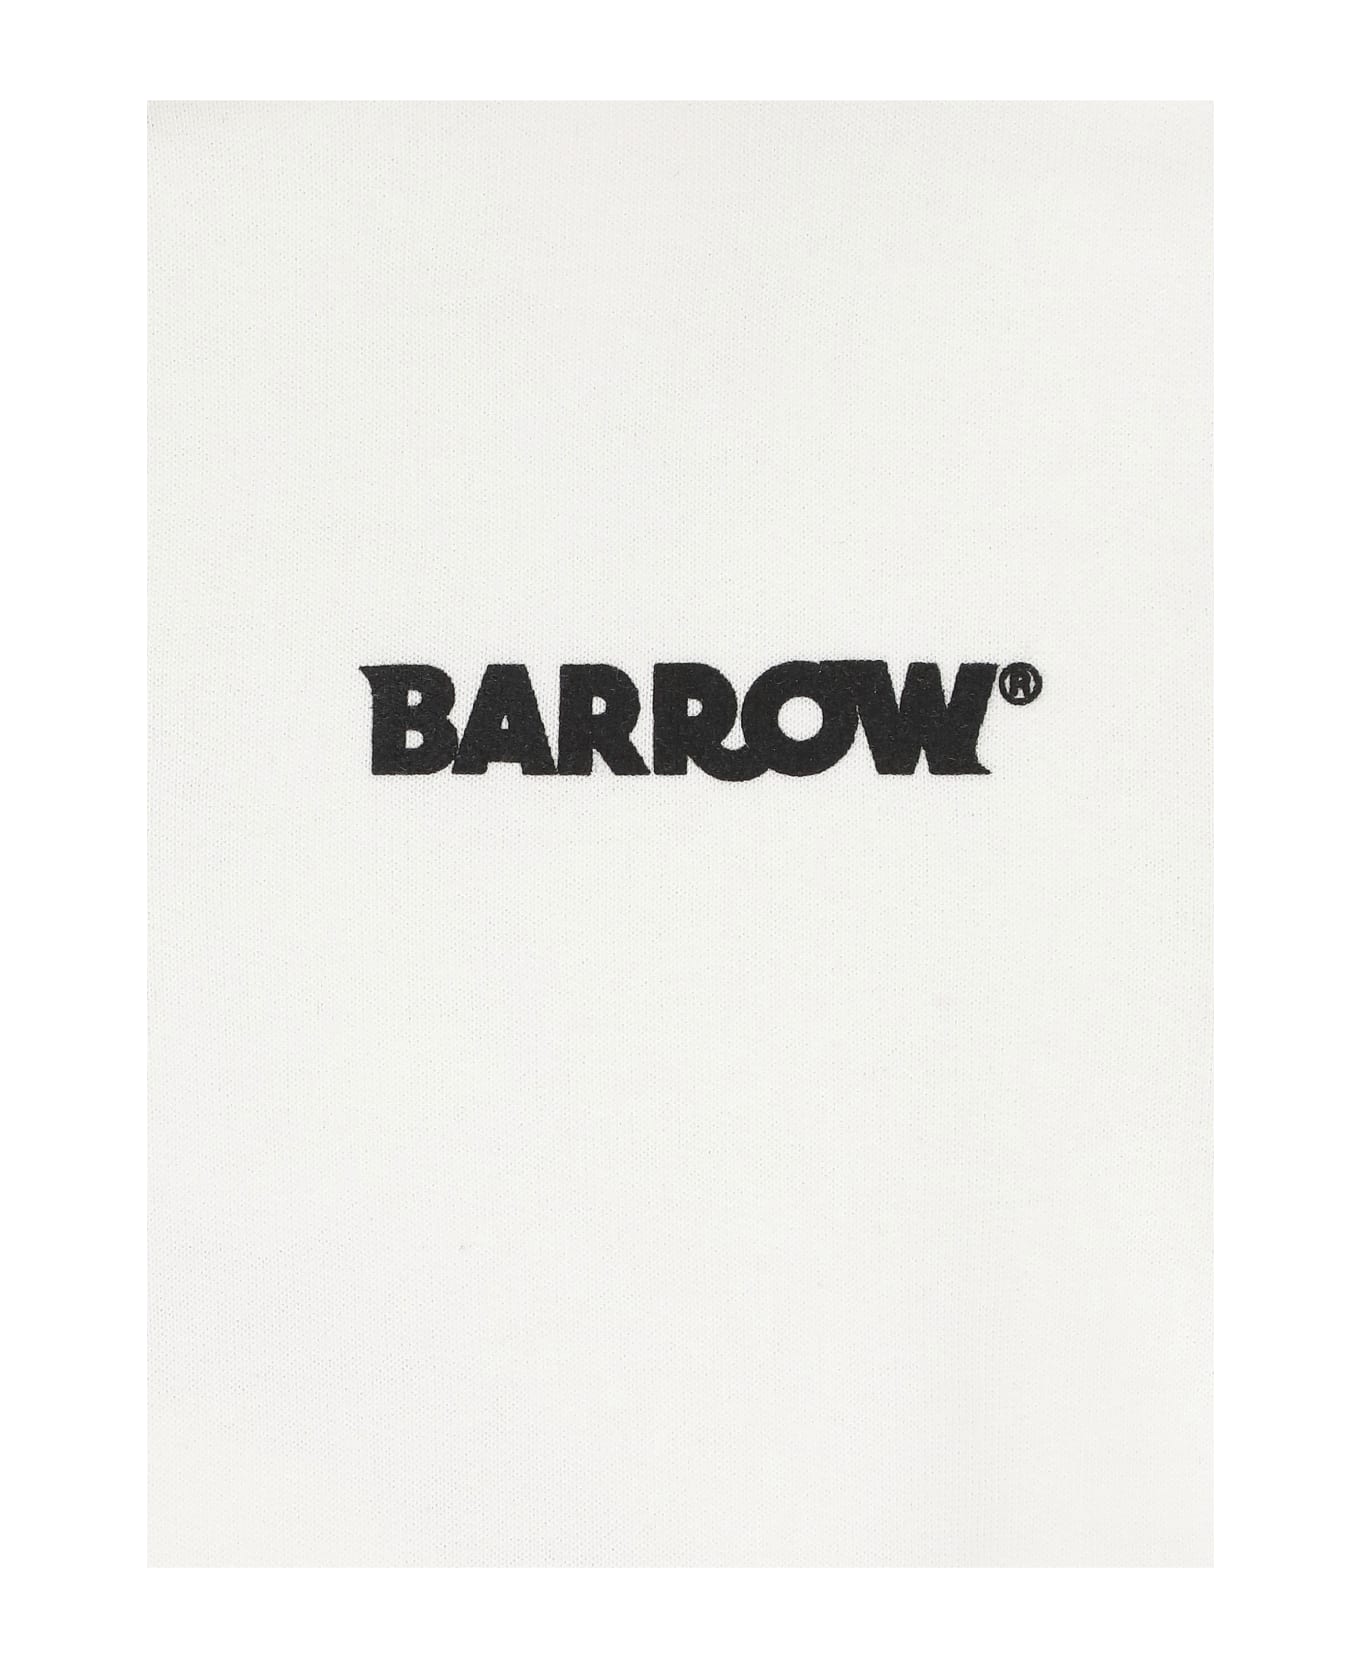 Barrow Hoodie With Print - White ニットウェア＆スウェットシャツ